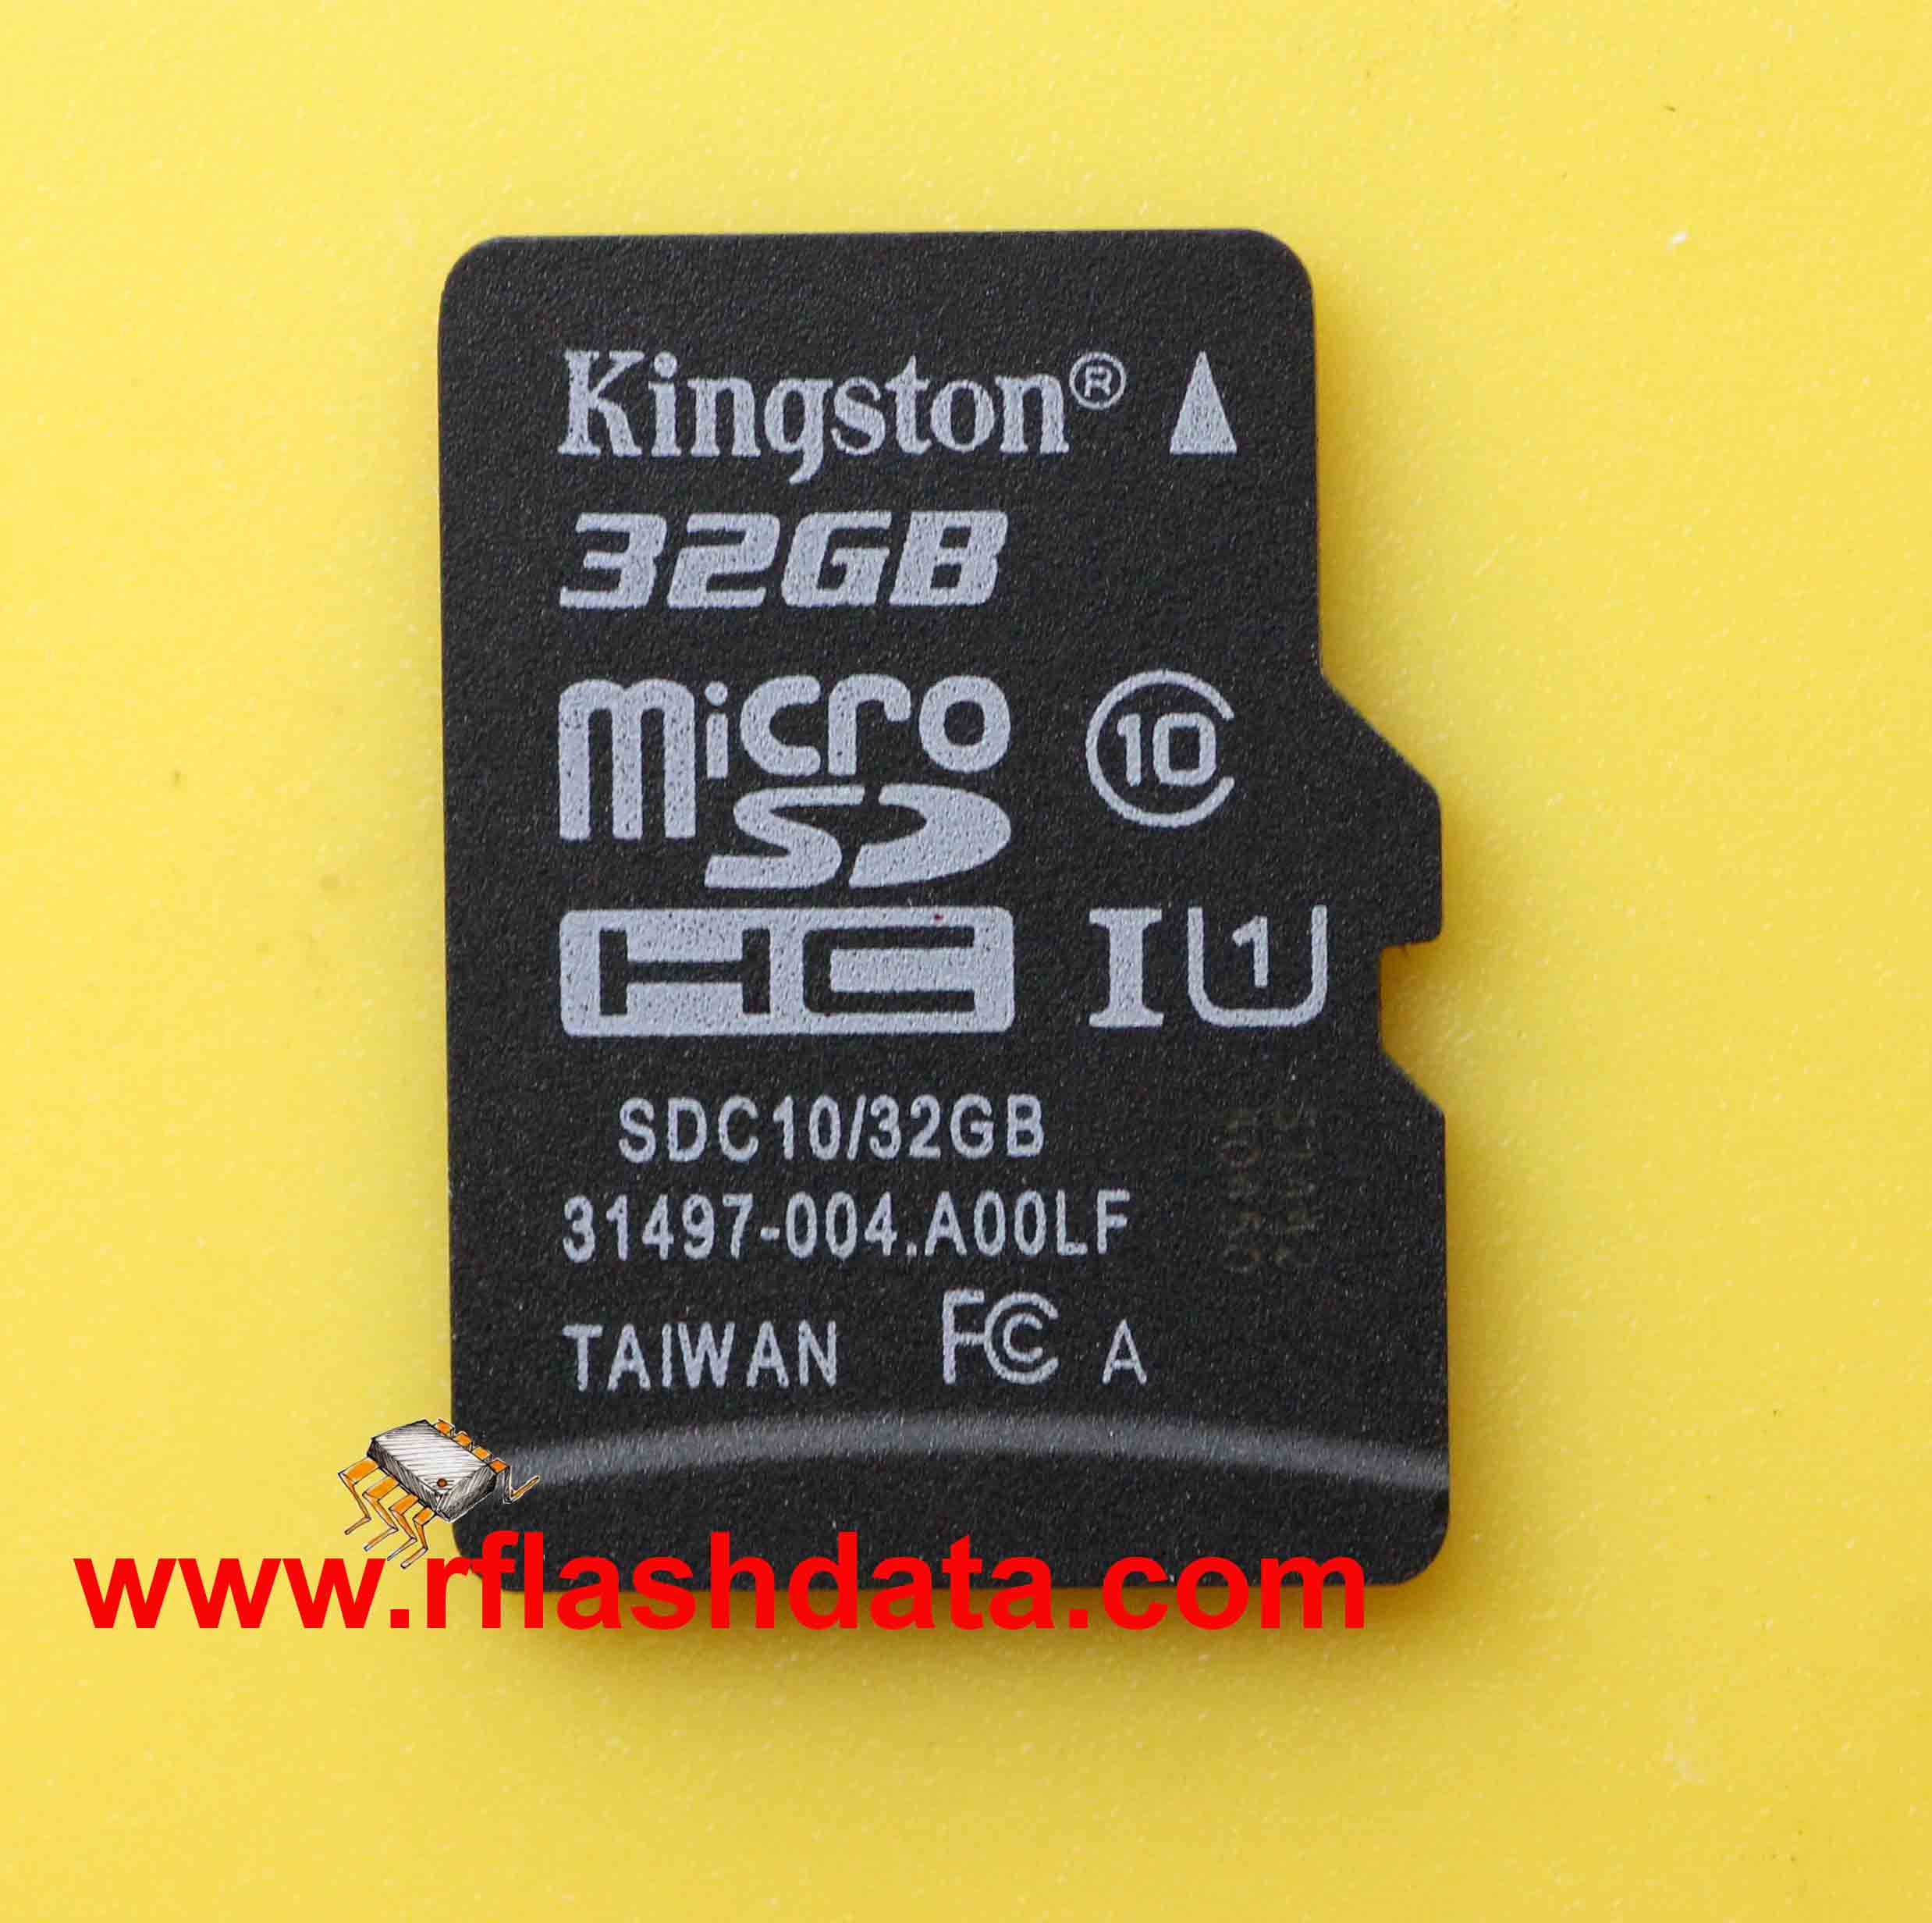 Kingston microSD data recovery